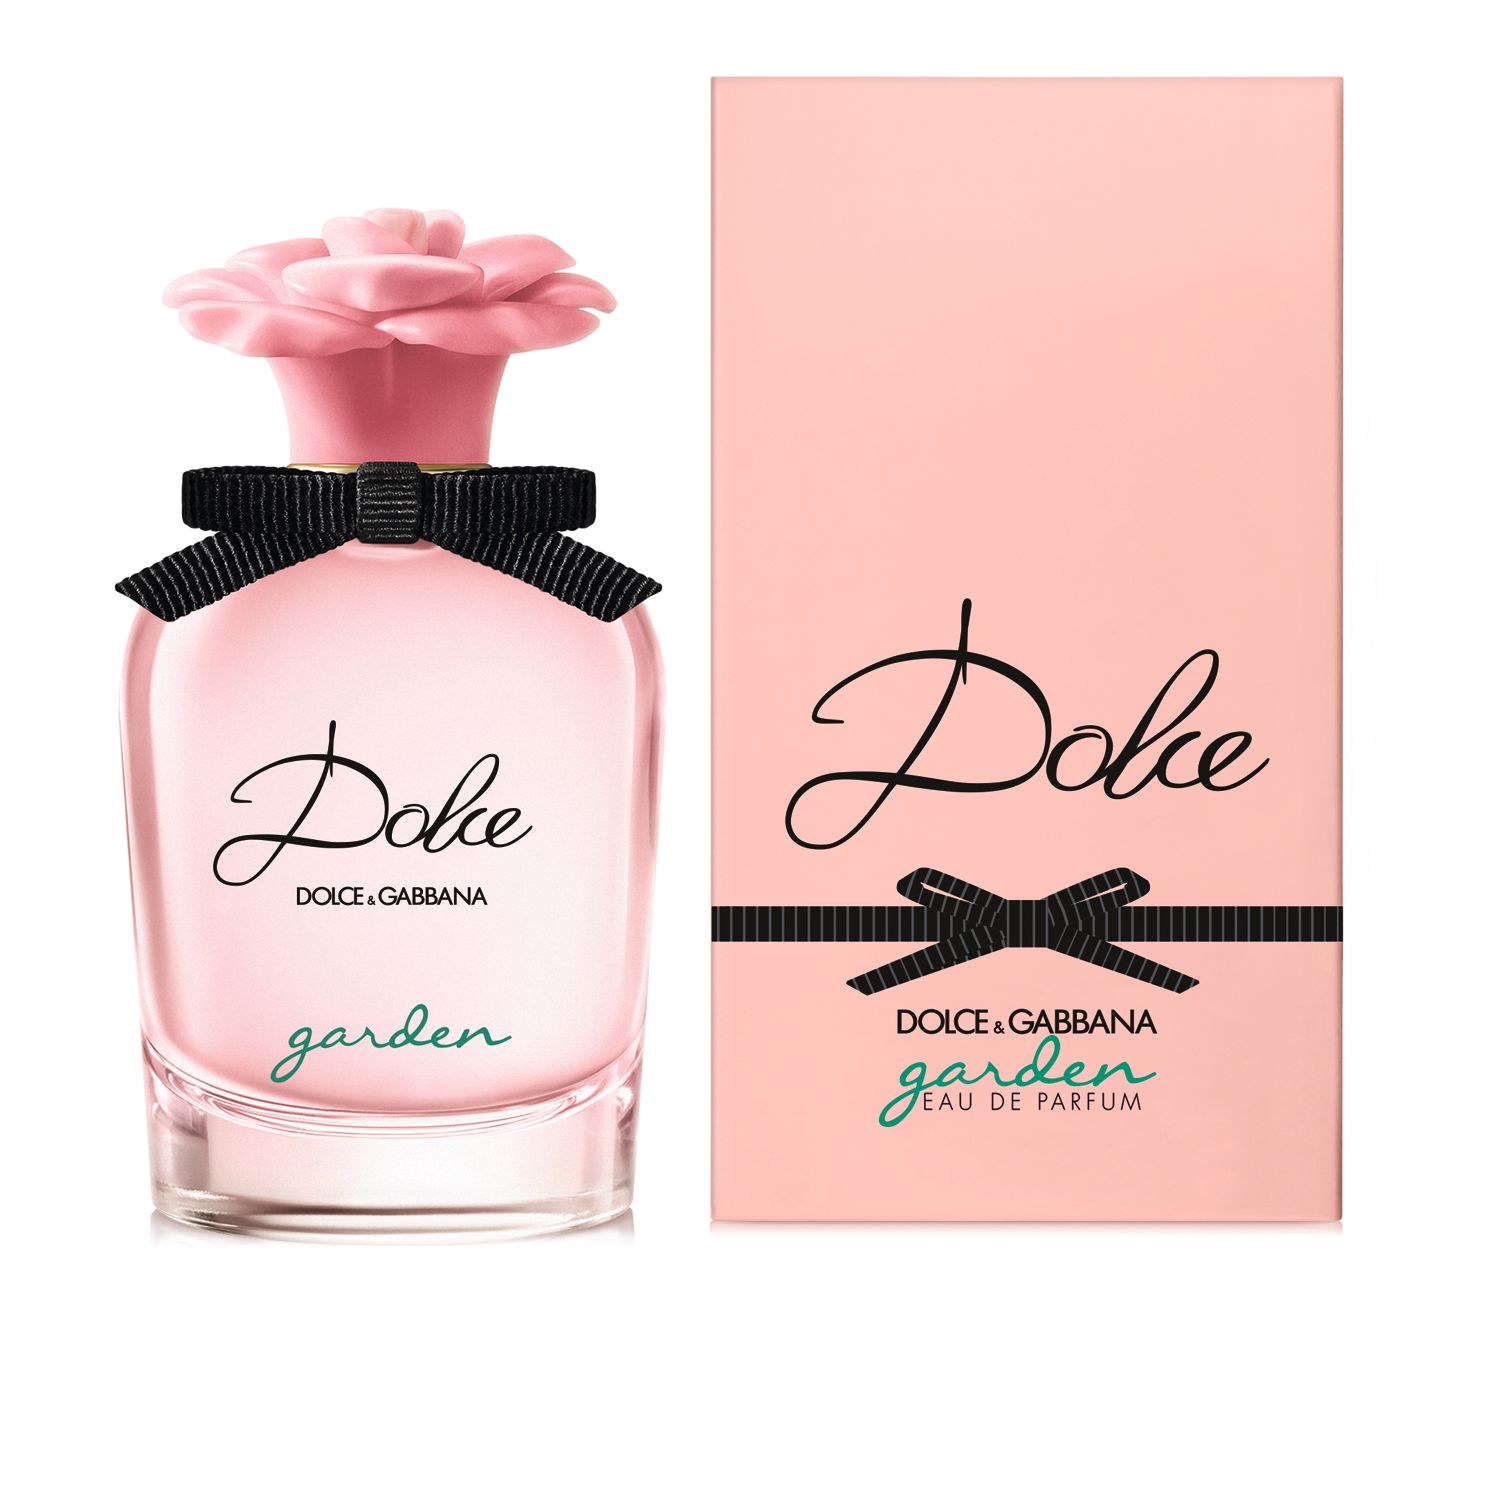 dolce and gabbana ladies perfume